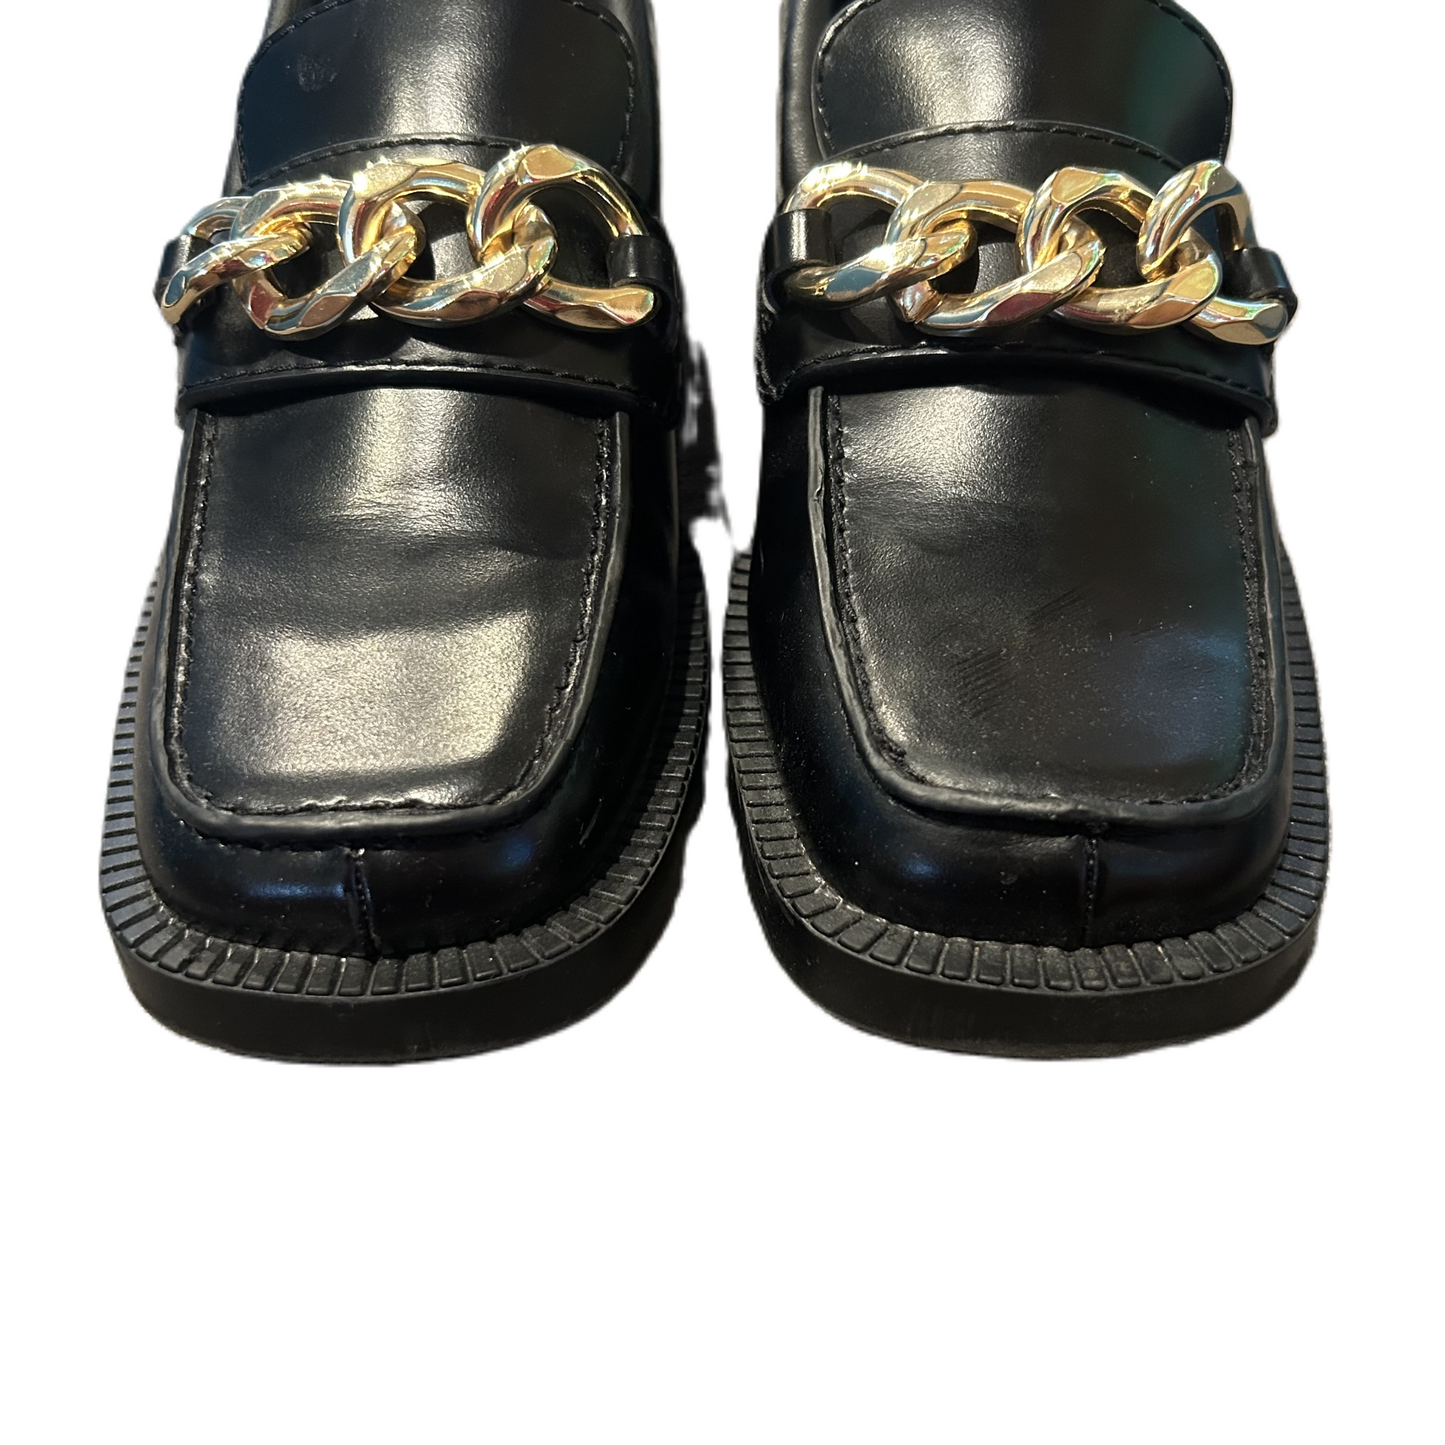 Black Shoes Flats By H&m, Size: 7.5